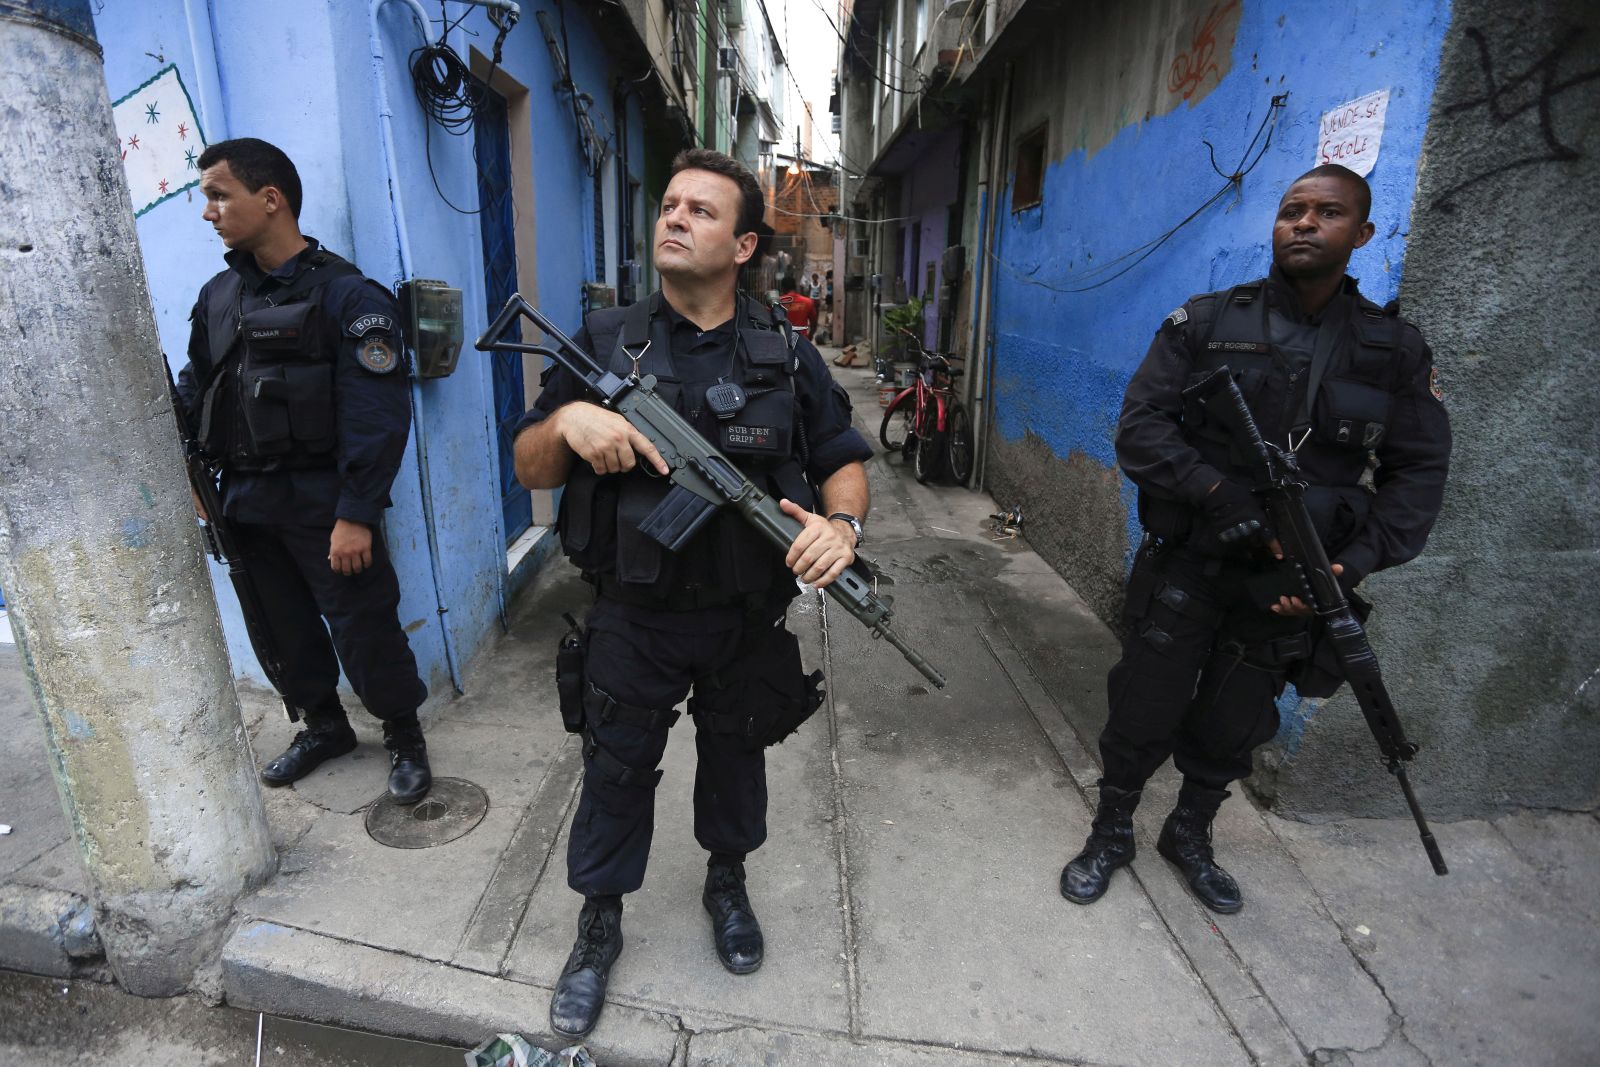 Military police patrolling a Rio favela.